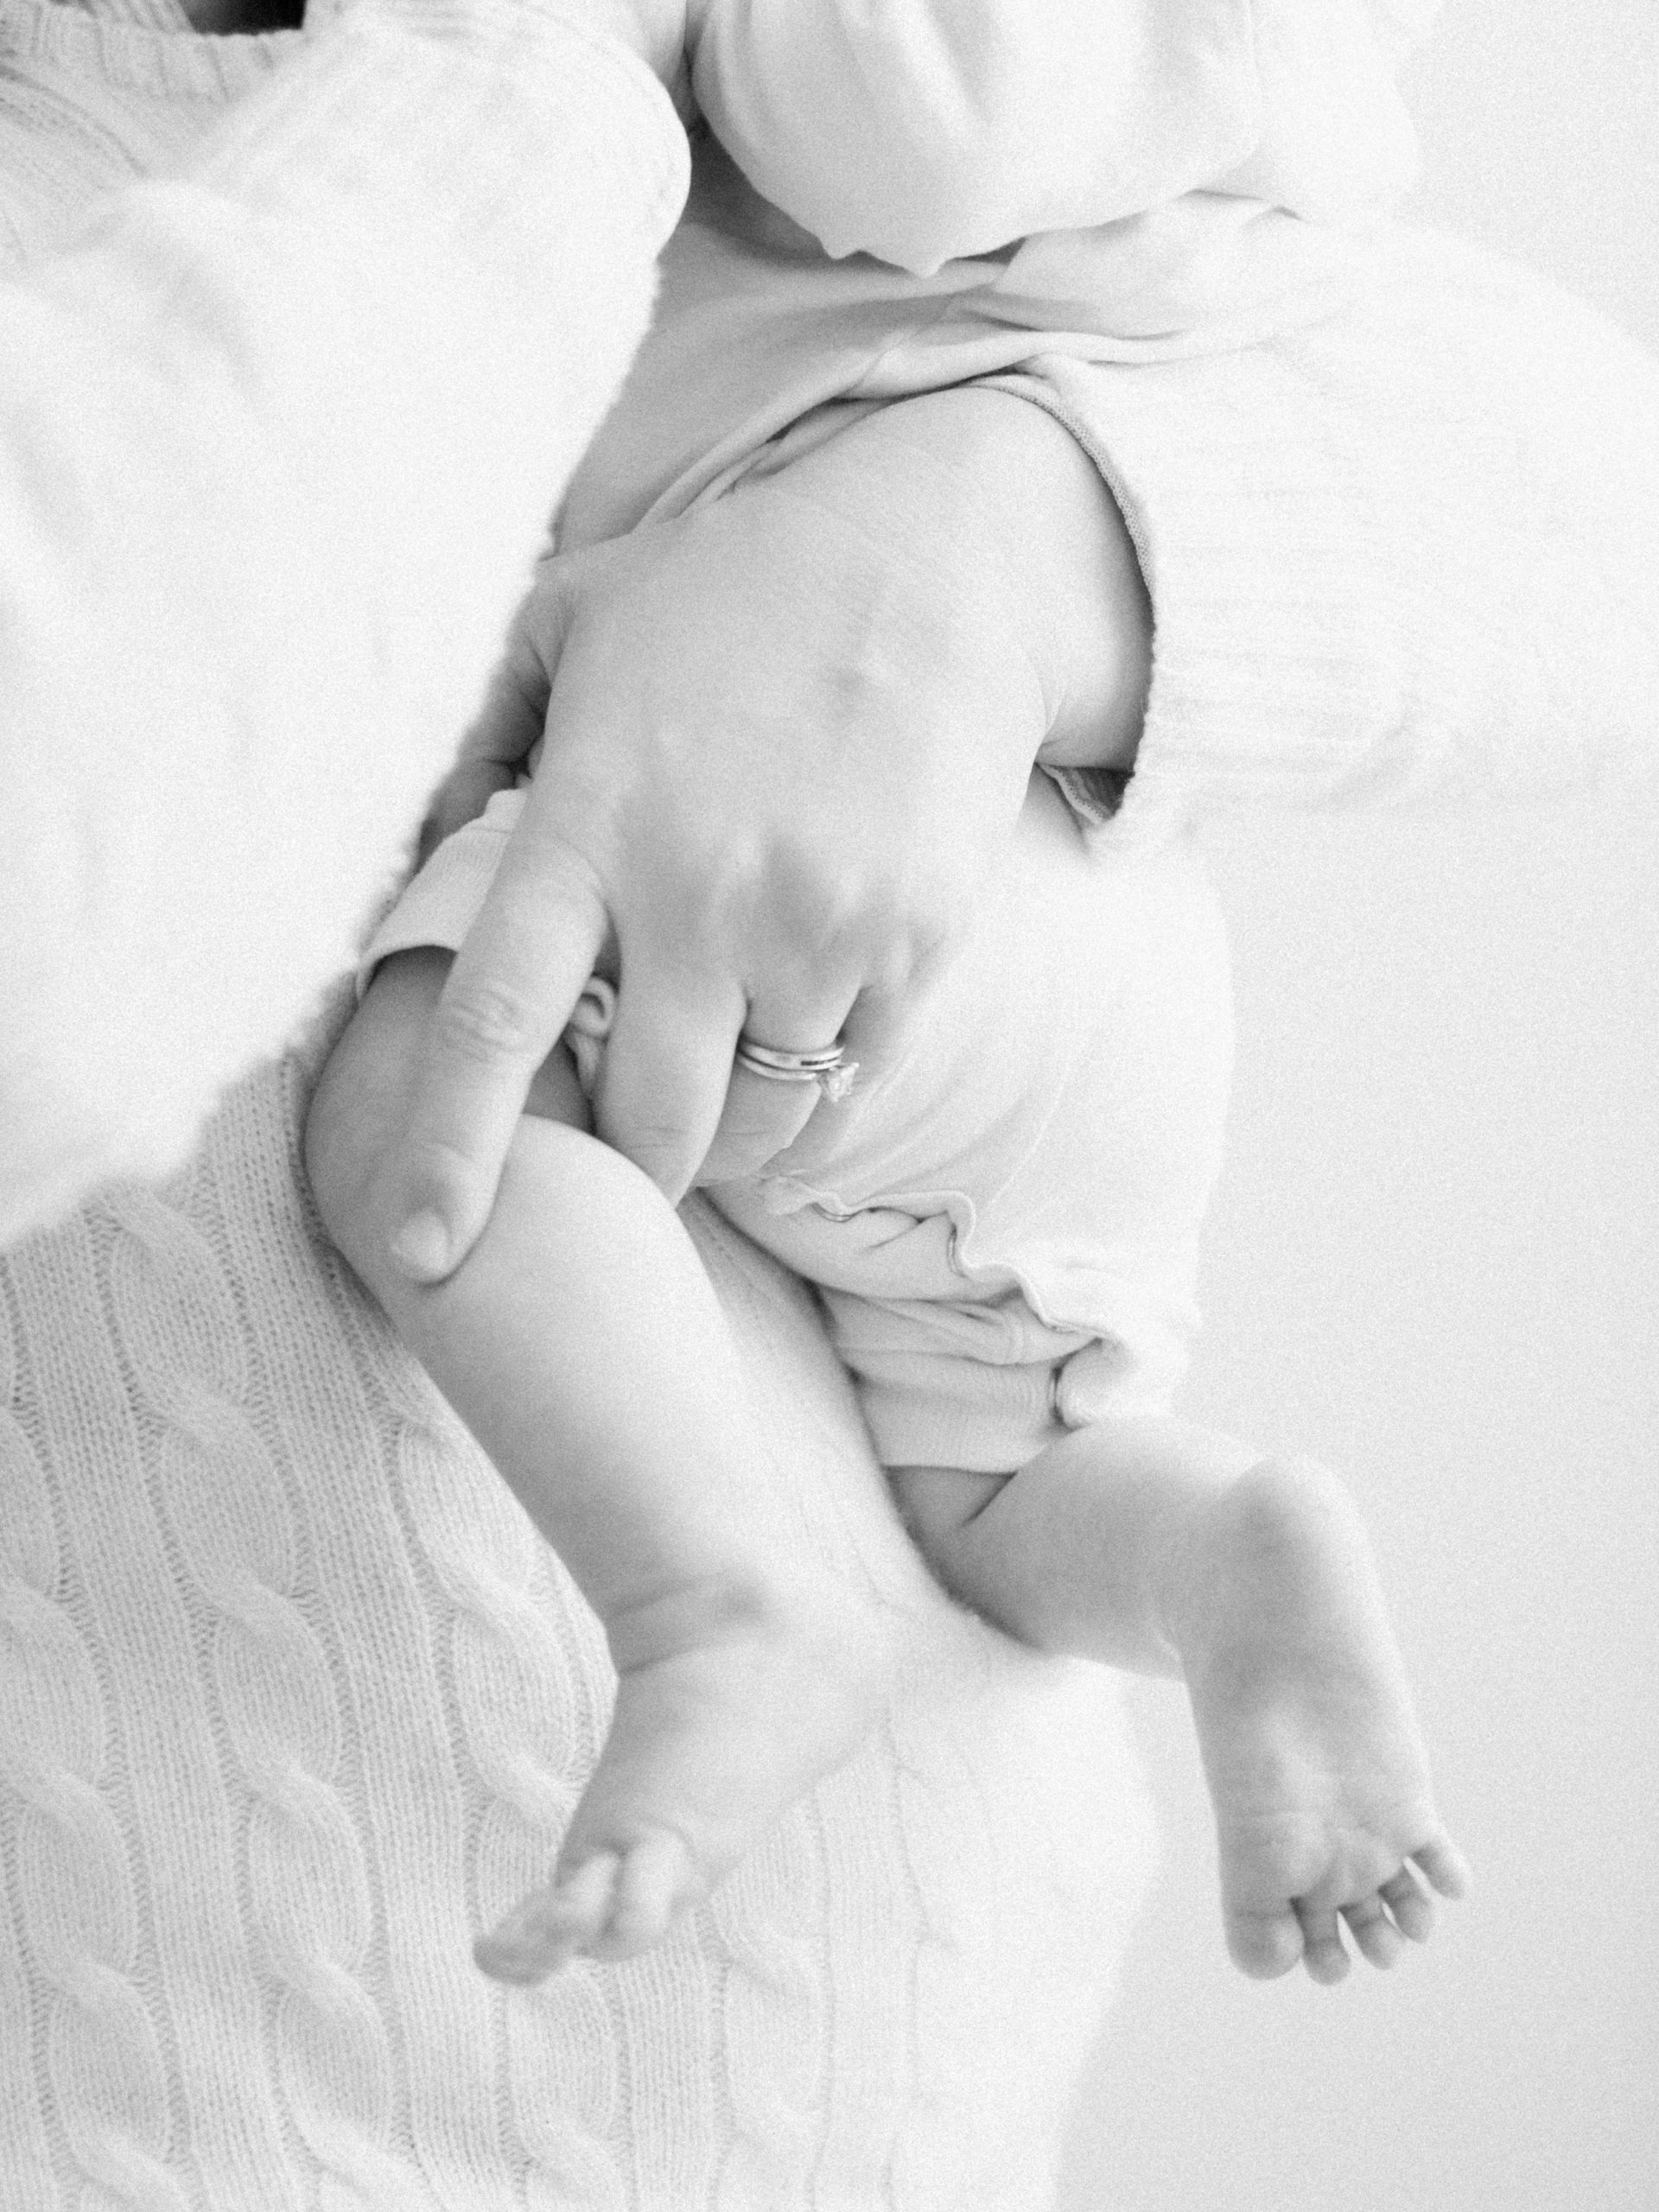 Black and white baby feet